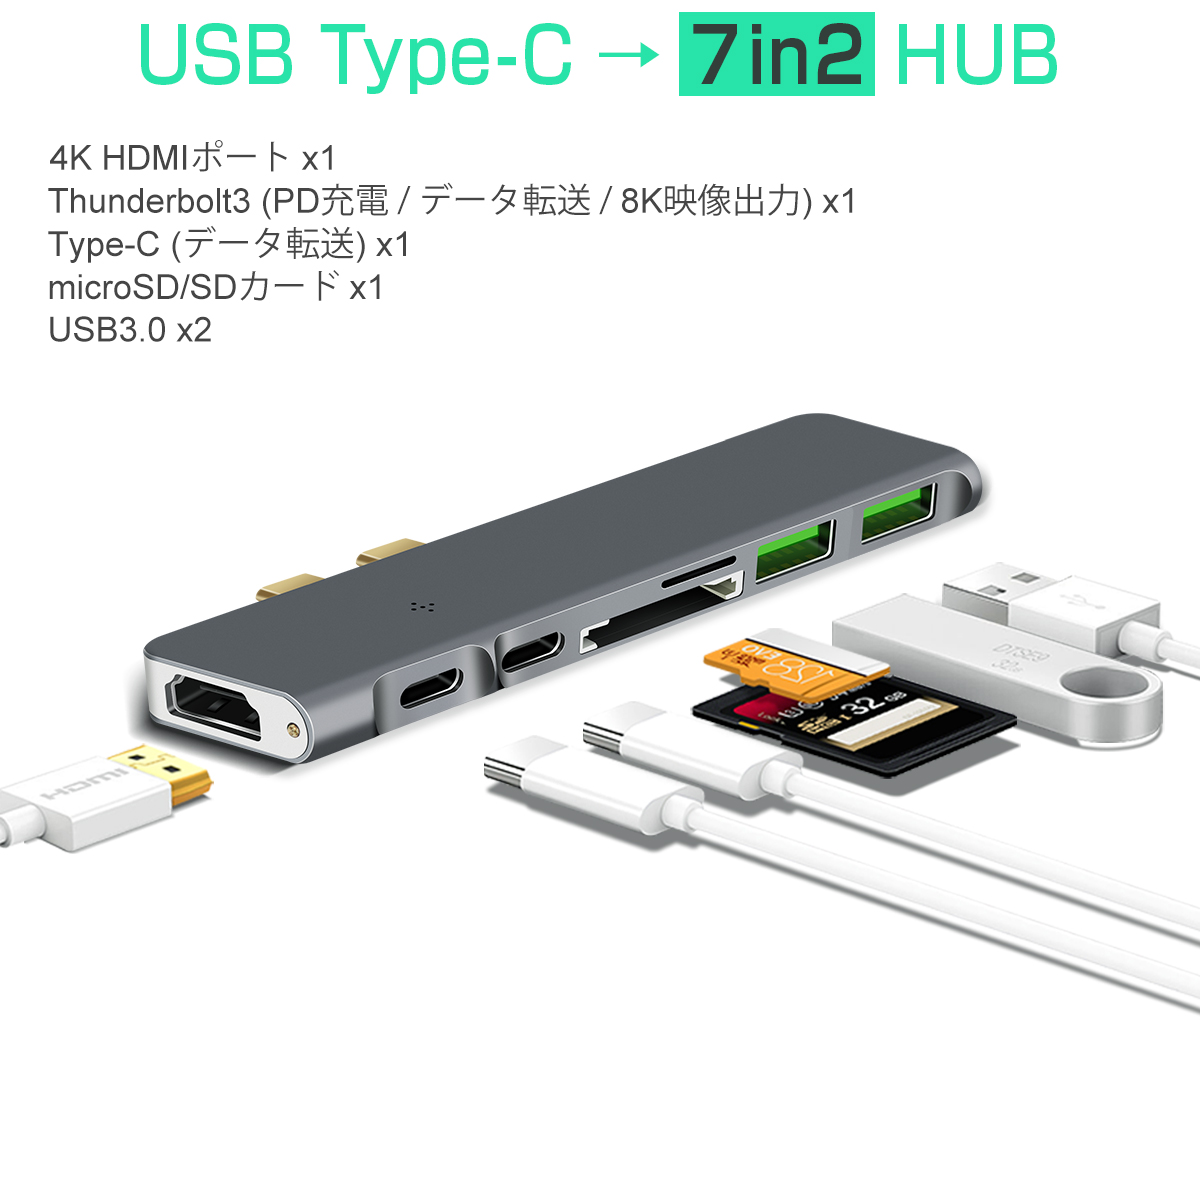 卸売B2B USB Type-C ハブ 7in1 USB3.0x2 4K 8K出力 HDMI Thunderbolt3 40Gbps PD充電 microSD SDスロット 拡張 変換 スペースグレイ MacBookに馴染むデザイン設計 3ヶ月保証